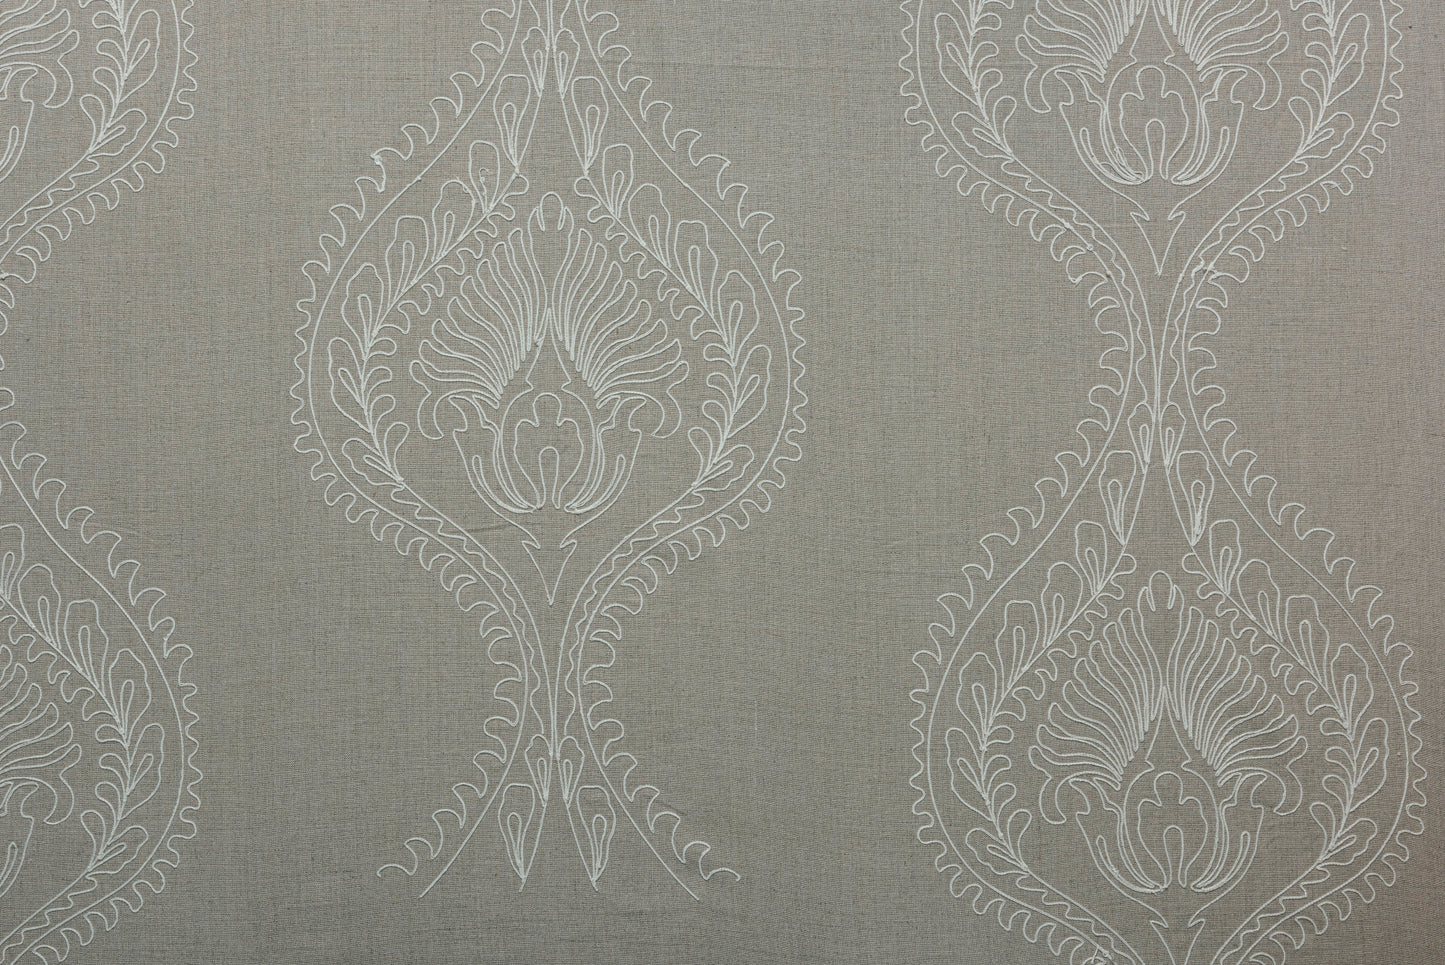 Ottoman Dori Embroidery on 100% Linen Fabric